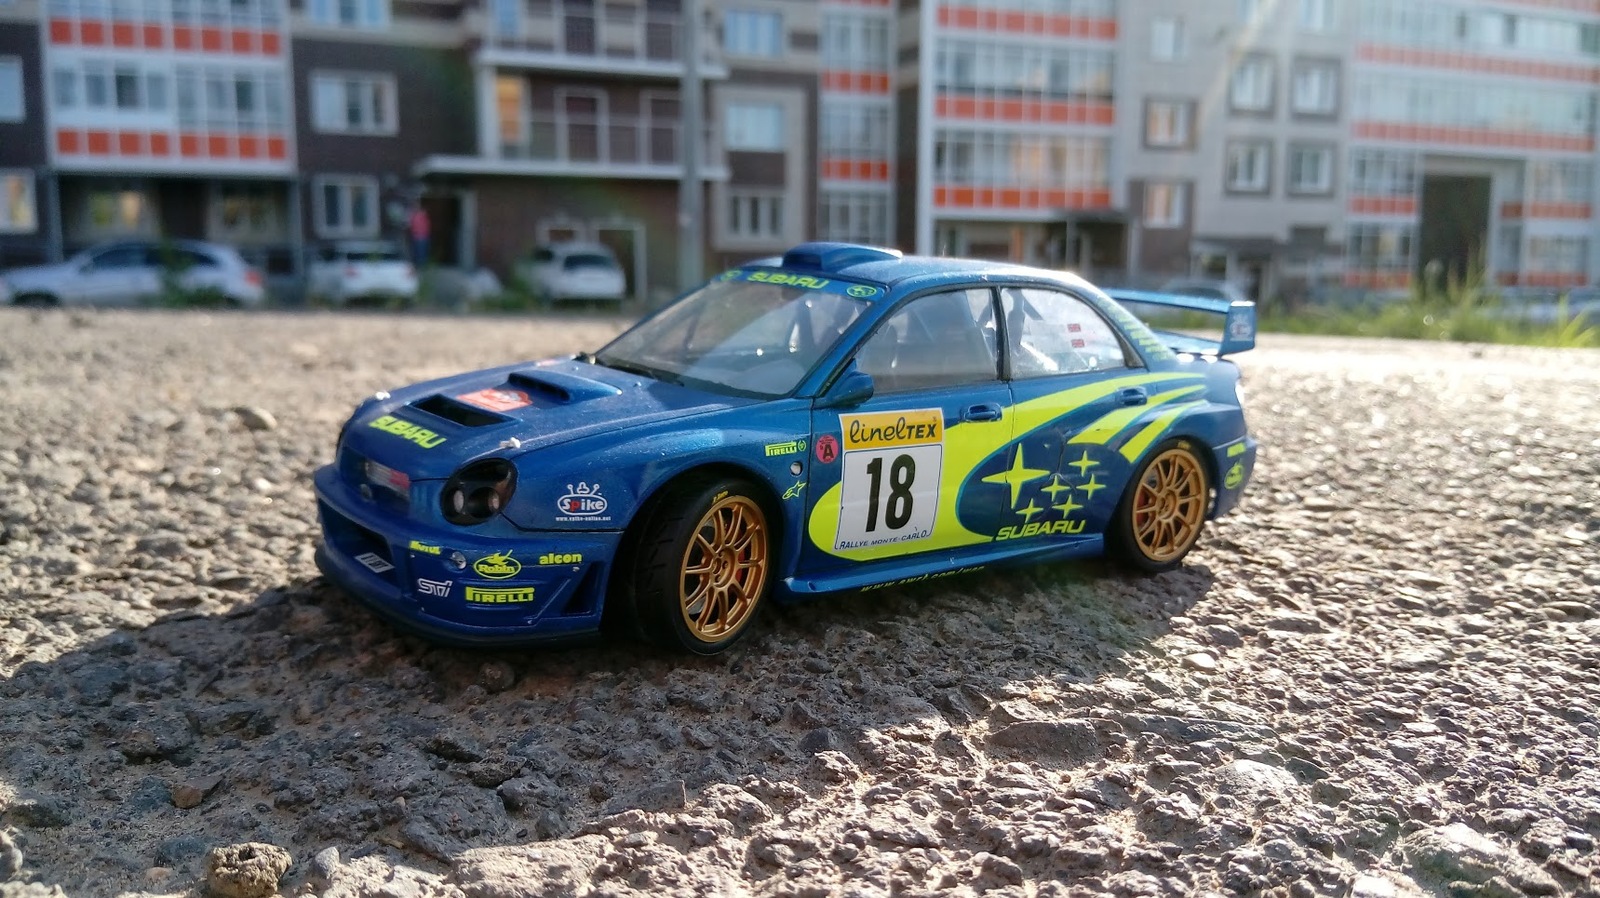 Subaru Impreza WRC 2001 1/24 by Tamiya - Longpost, Subaru impreza, Prefabricated model, Car modeling, Tamiya, My